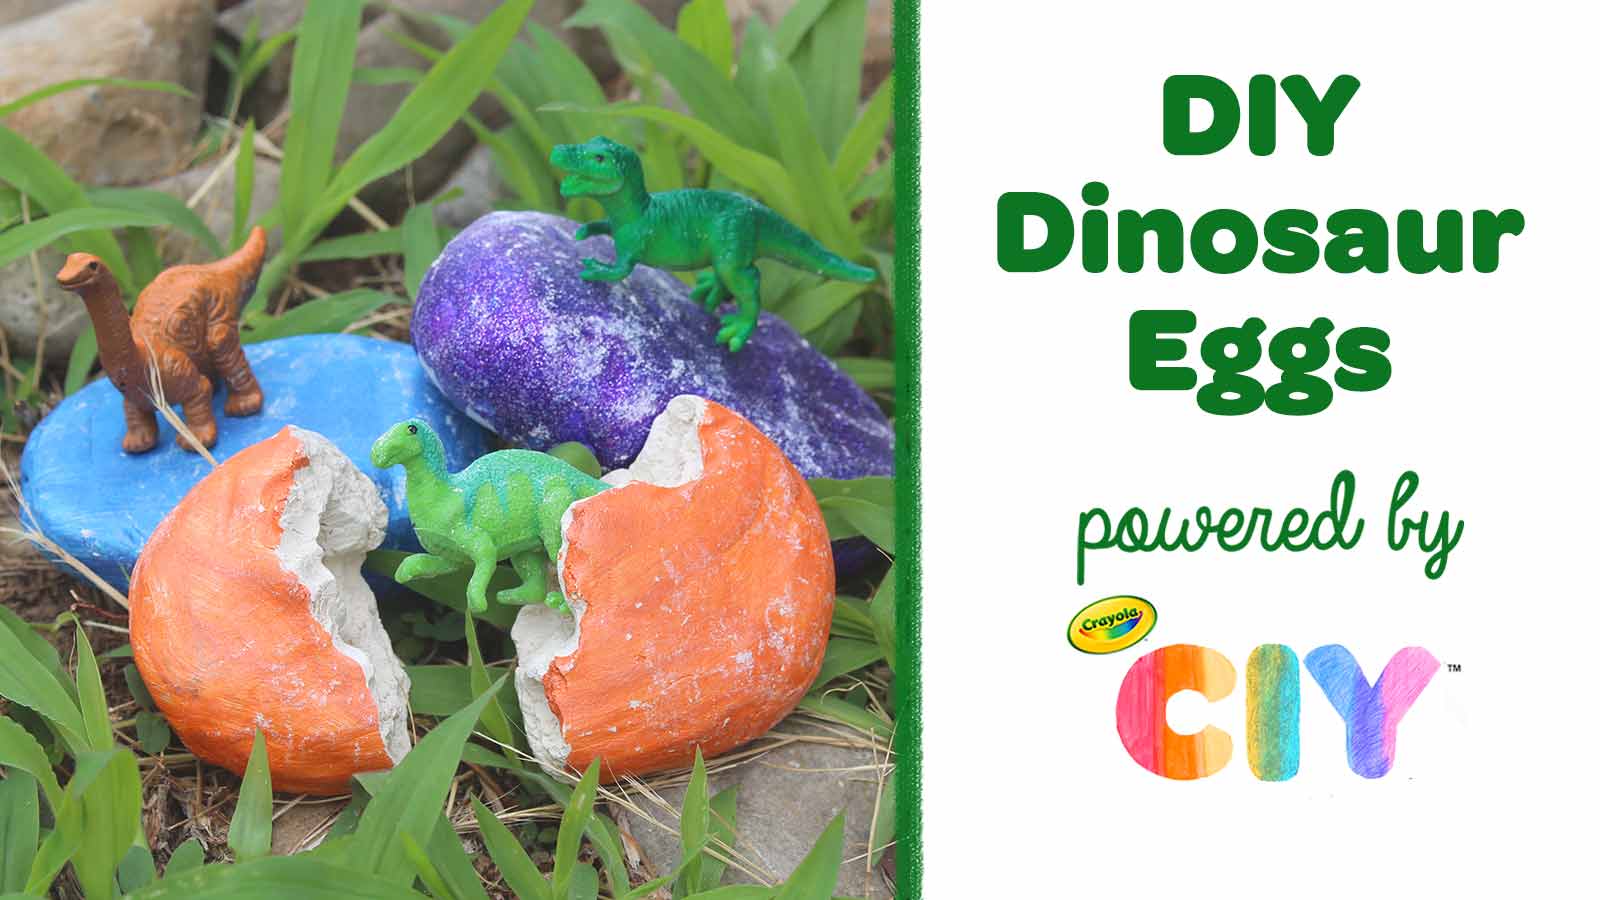 DIY Dinosaur Eggs CIY Video Poster Frame